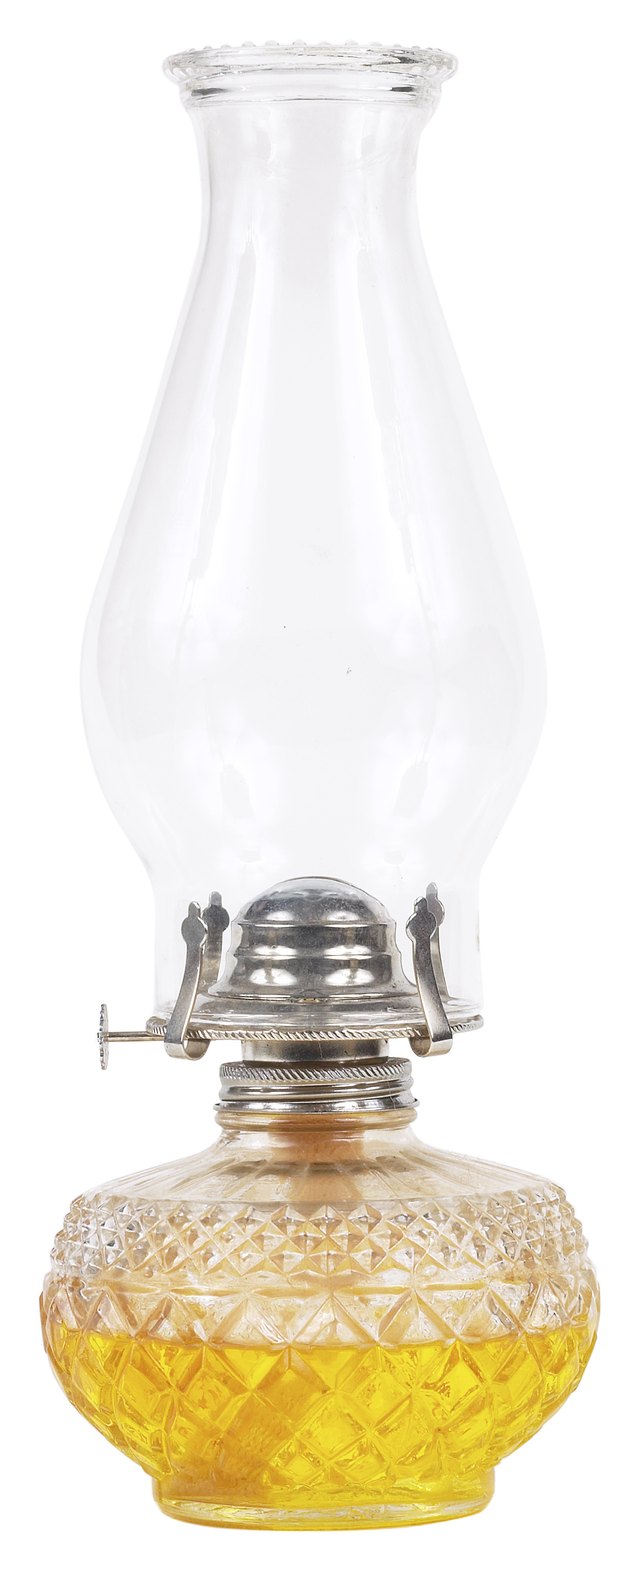 Trimming Oil Lamp Wicks for More Efficient Burn